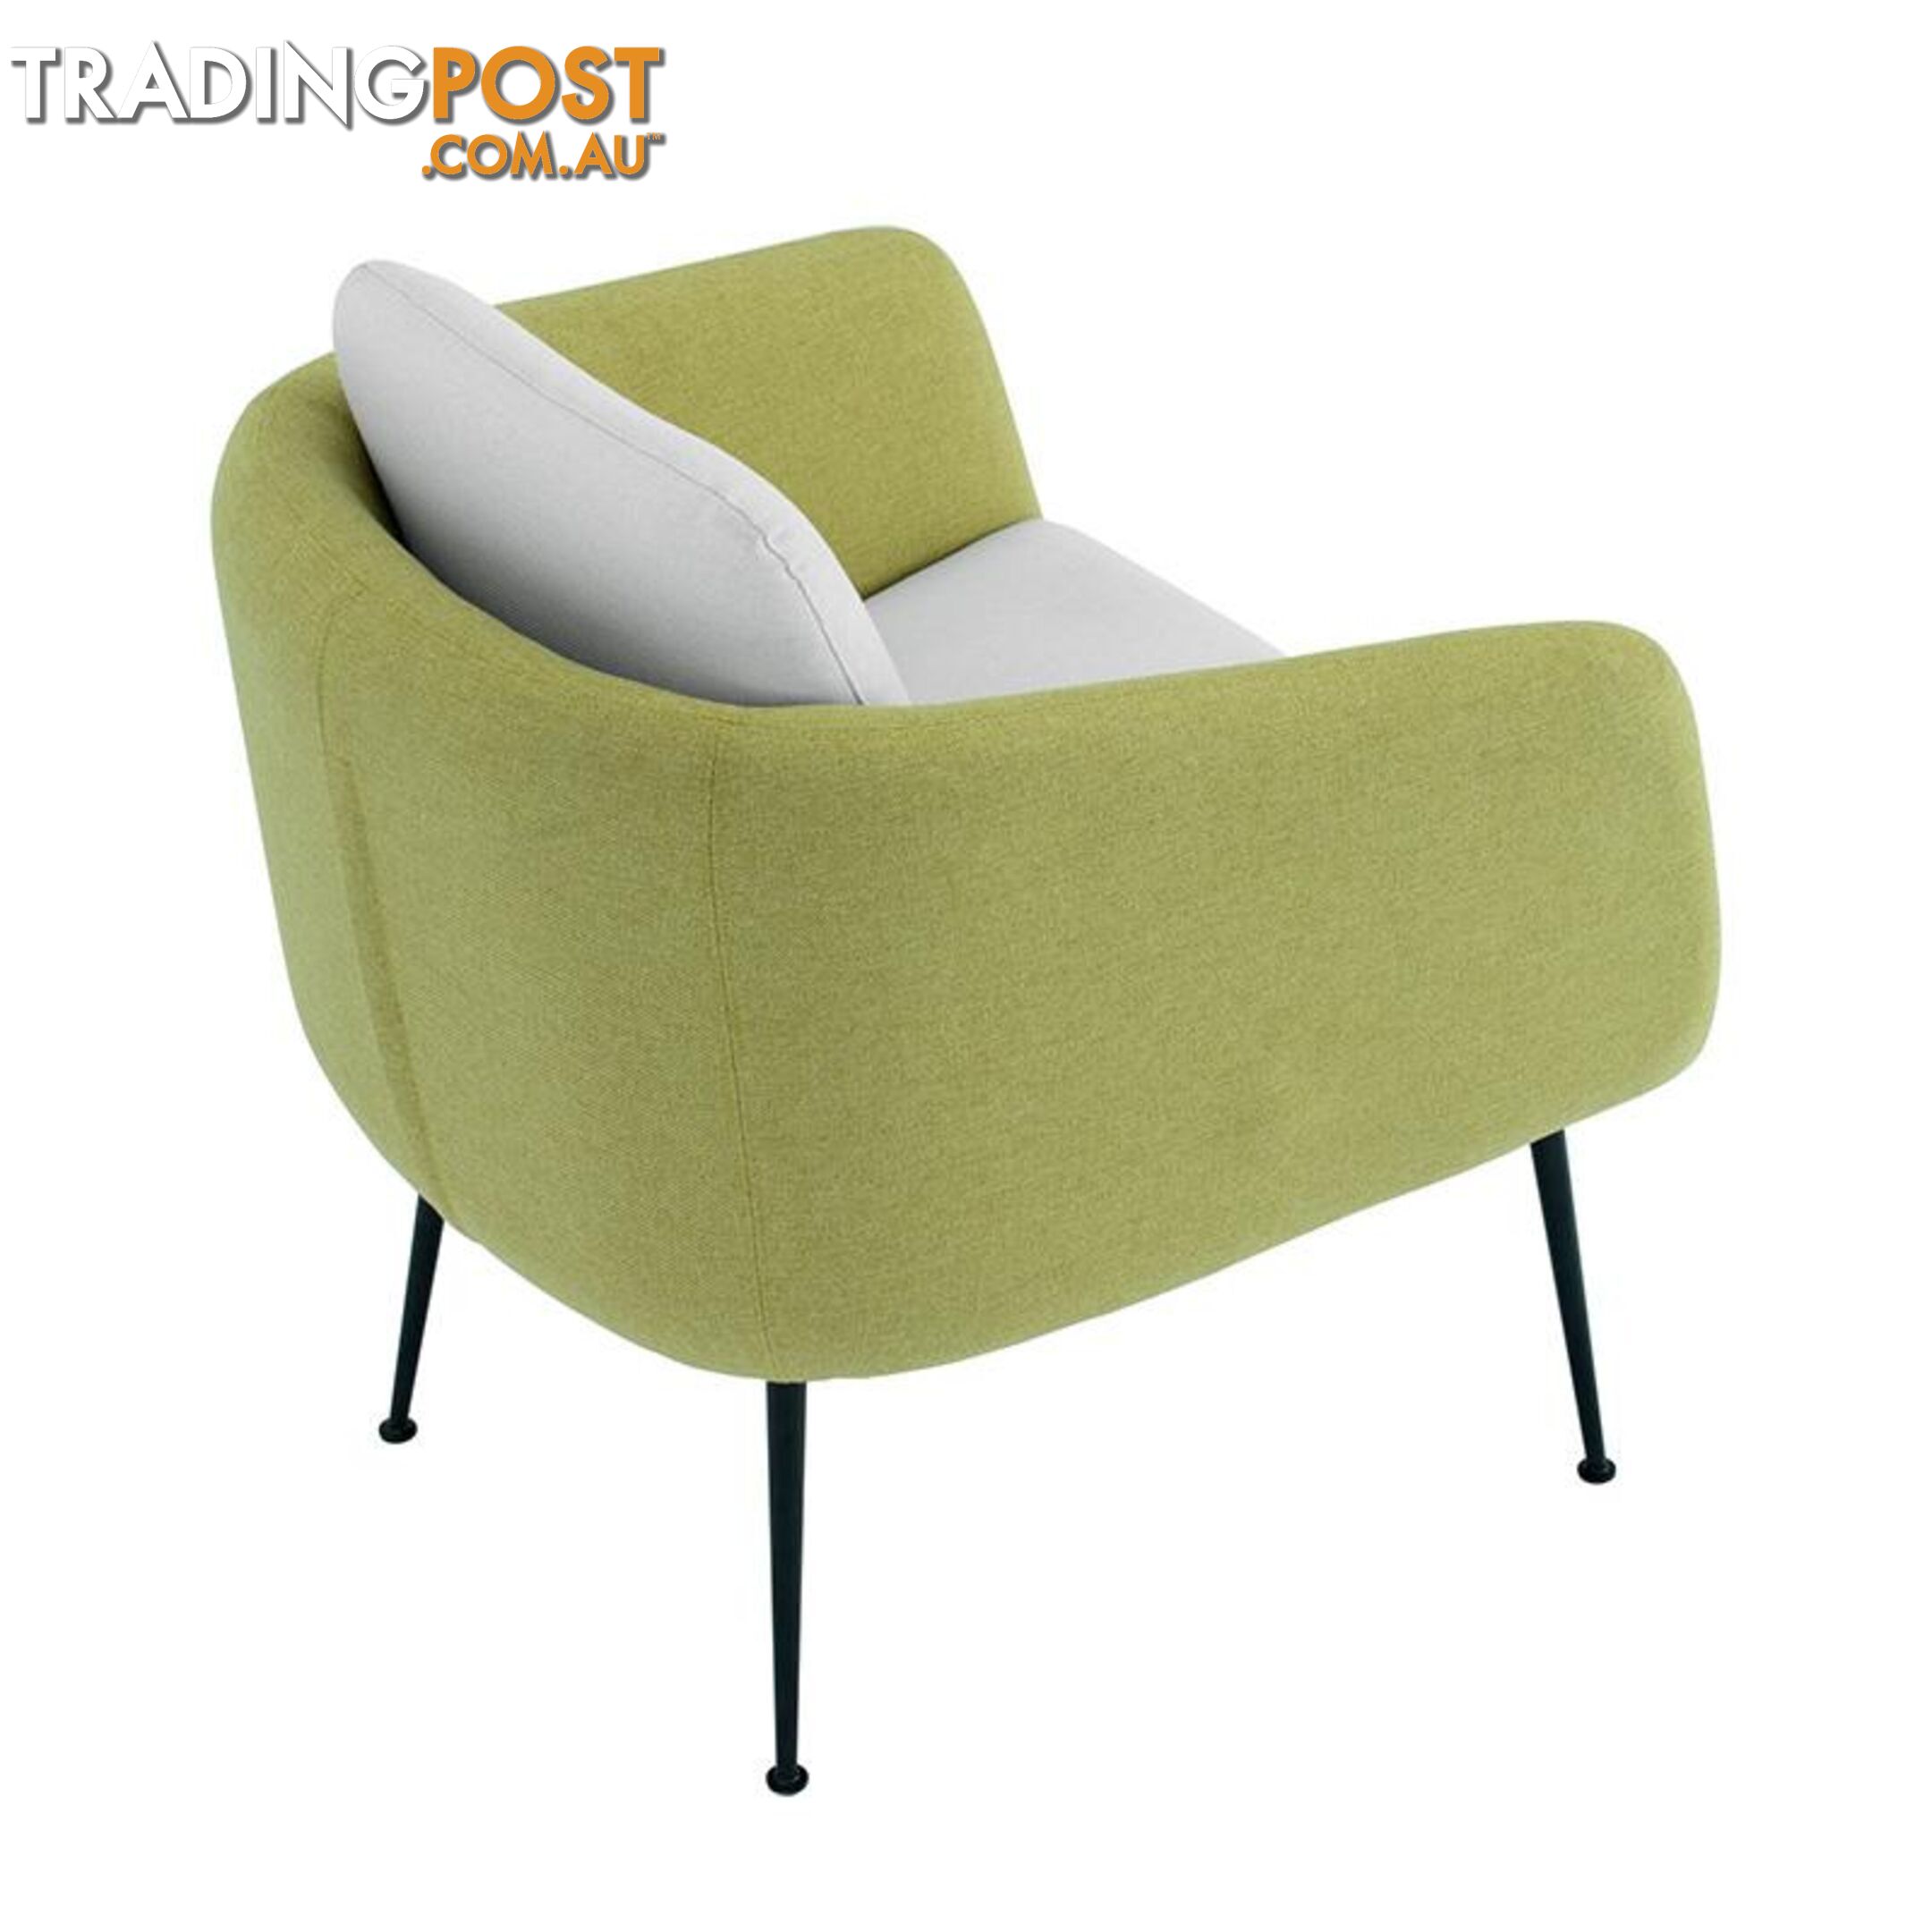 COUGAR Lounge Chair - Tea Green & Pale Golden - 231171 - 9334719006321